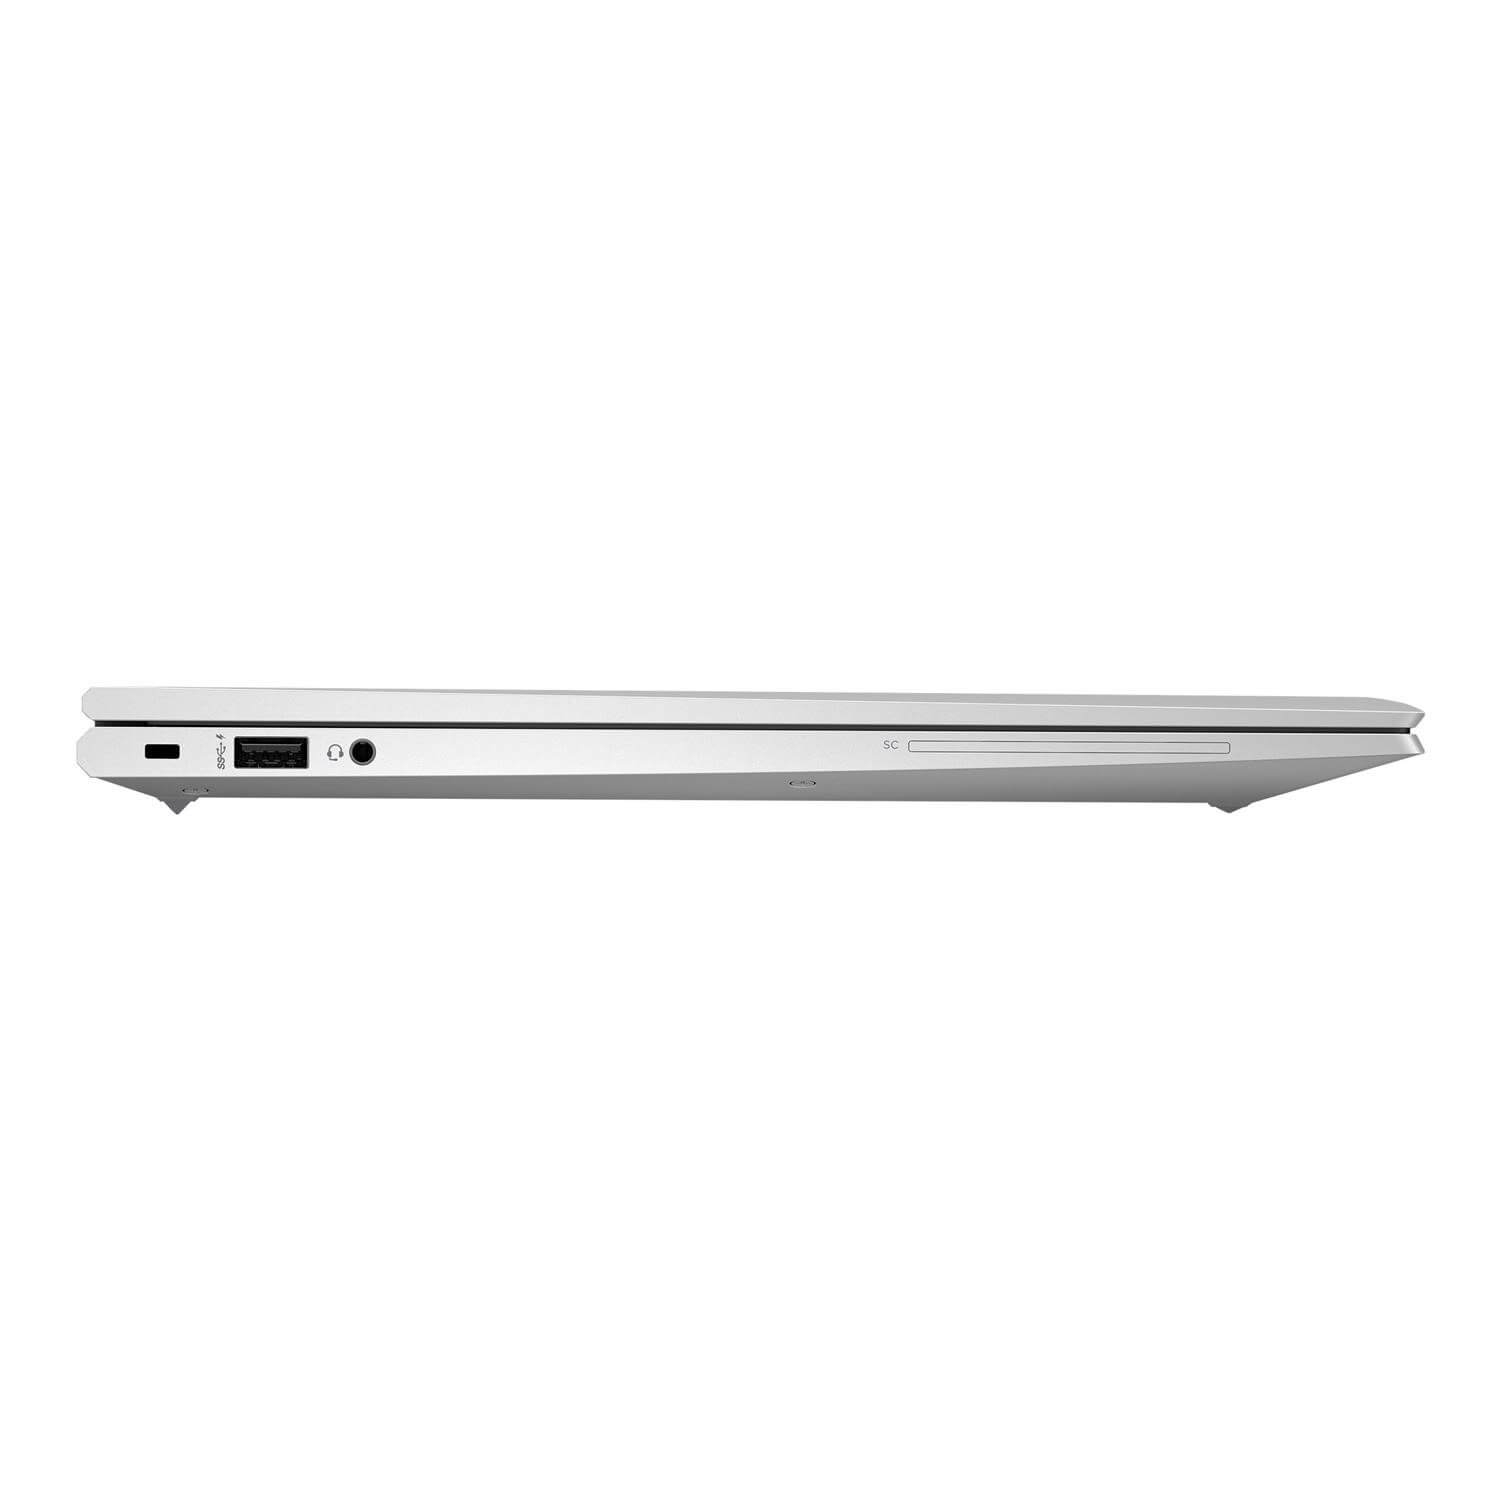 Laptop HP Elitebook 850 G7 Core i5-10210U, Ram 8GB, SSD 256GB, 15.6 inch FHD